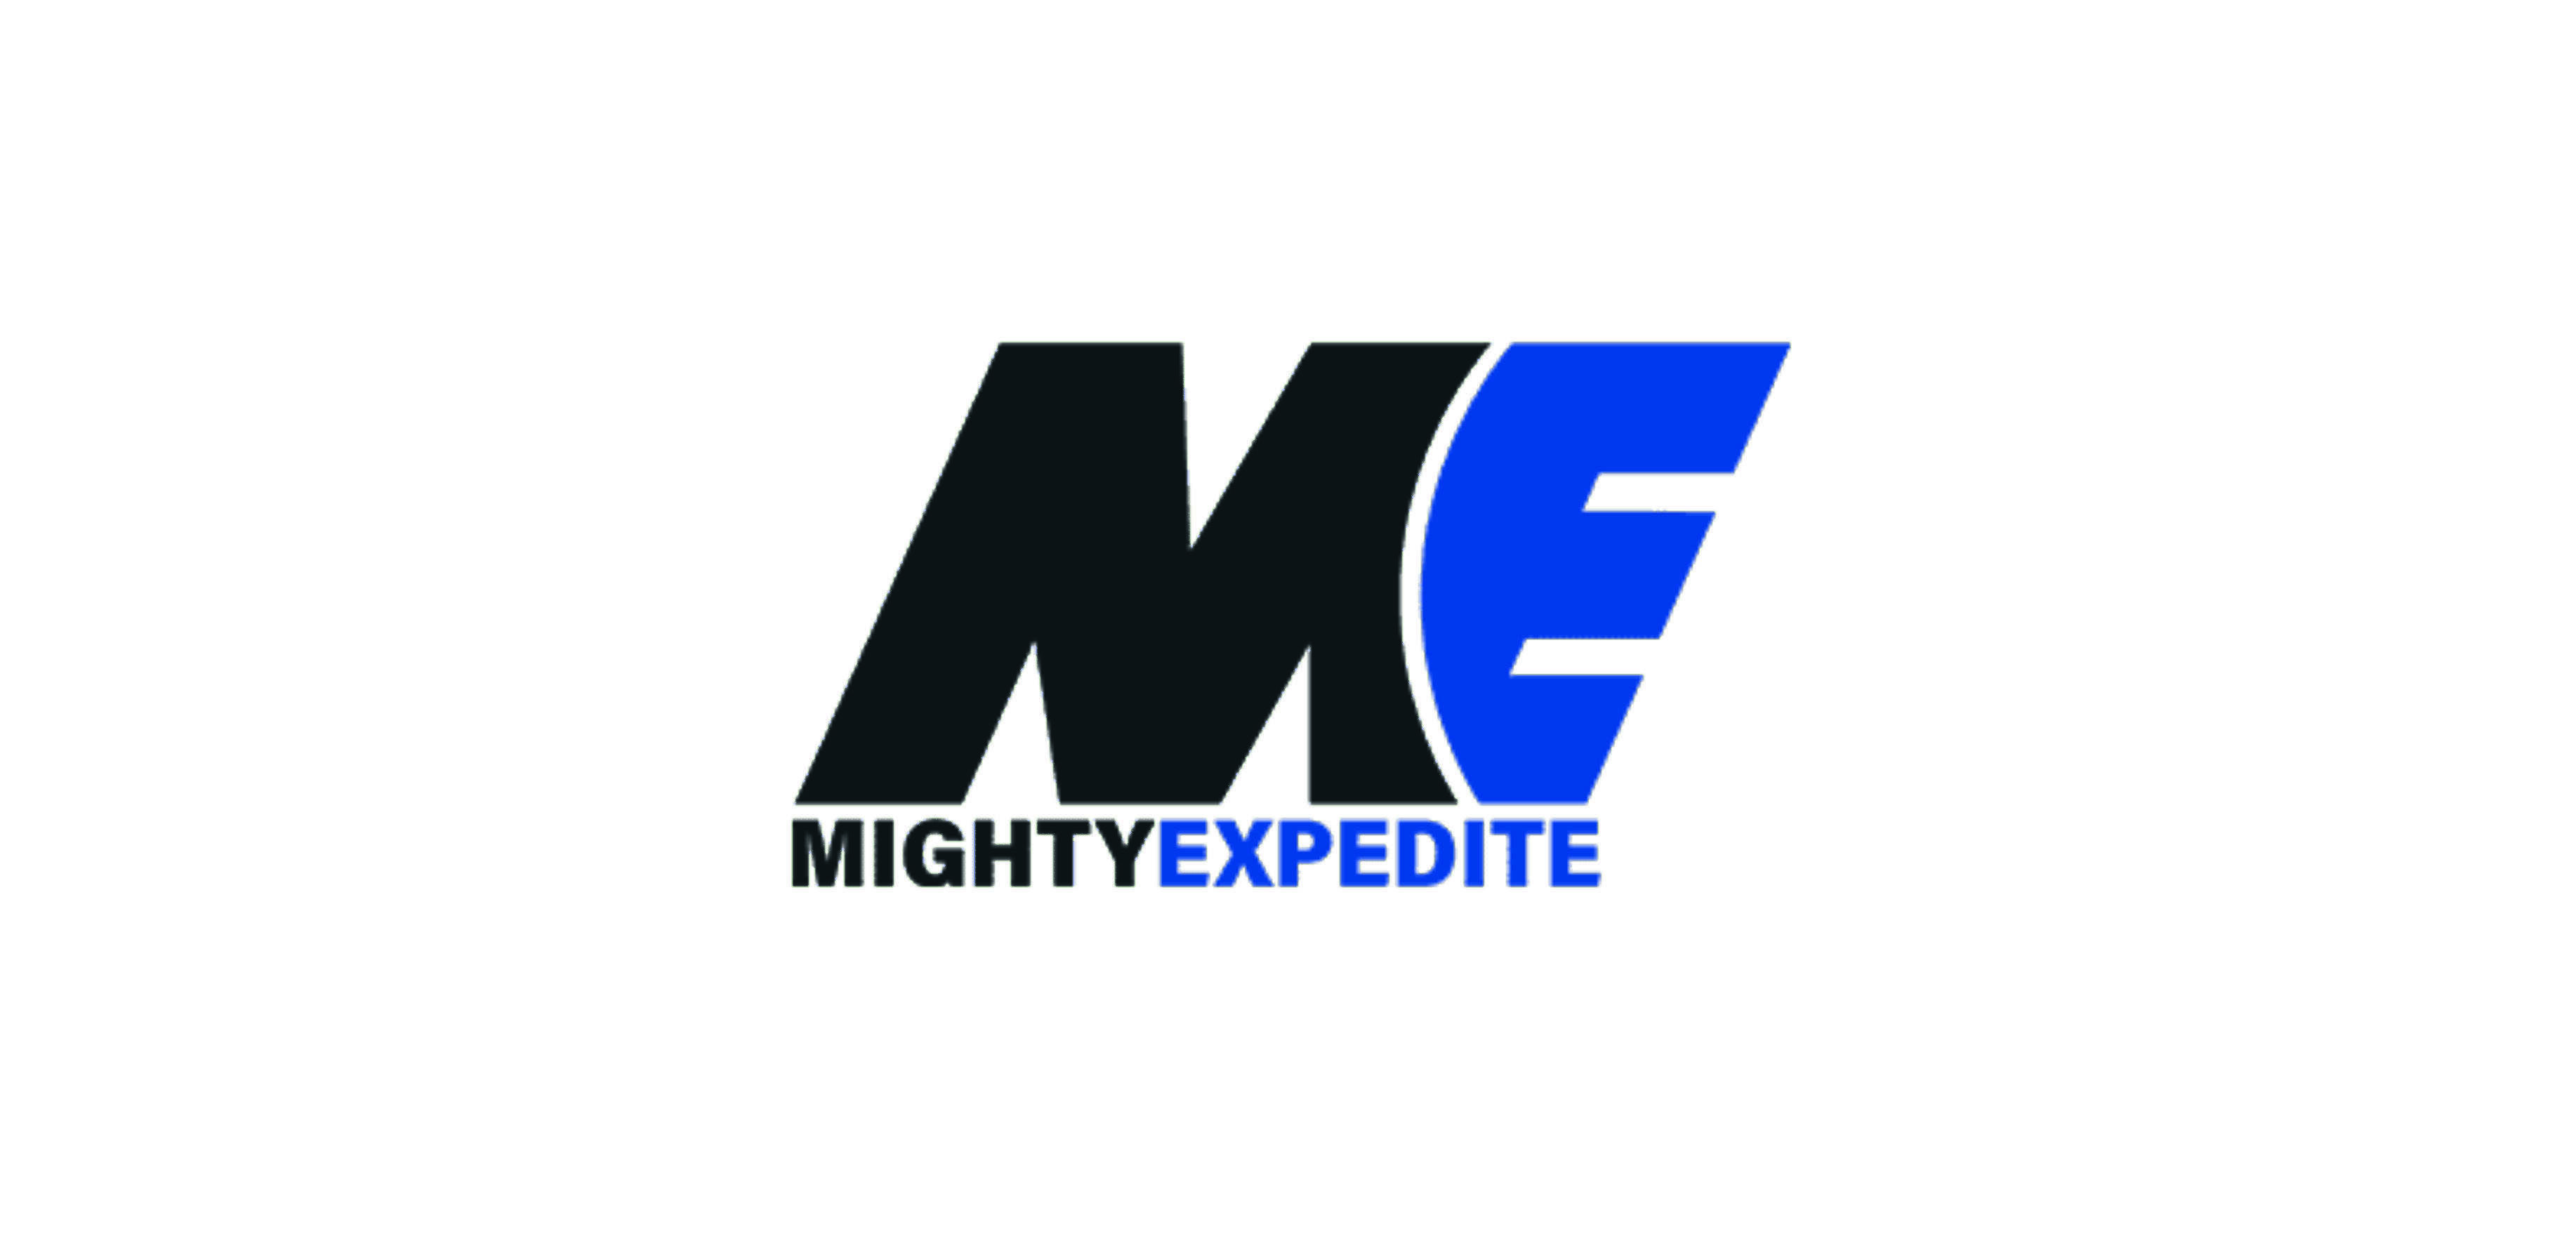 Mighty Expedite